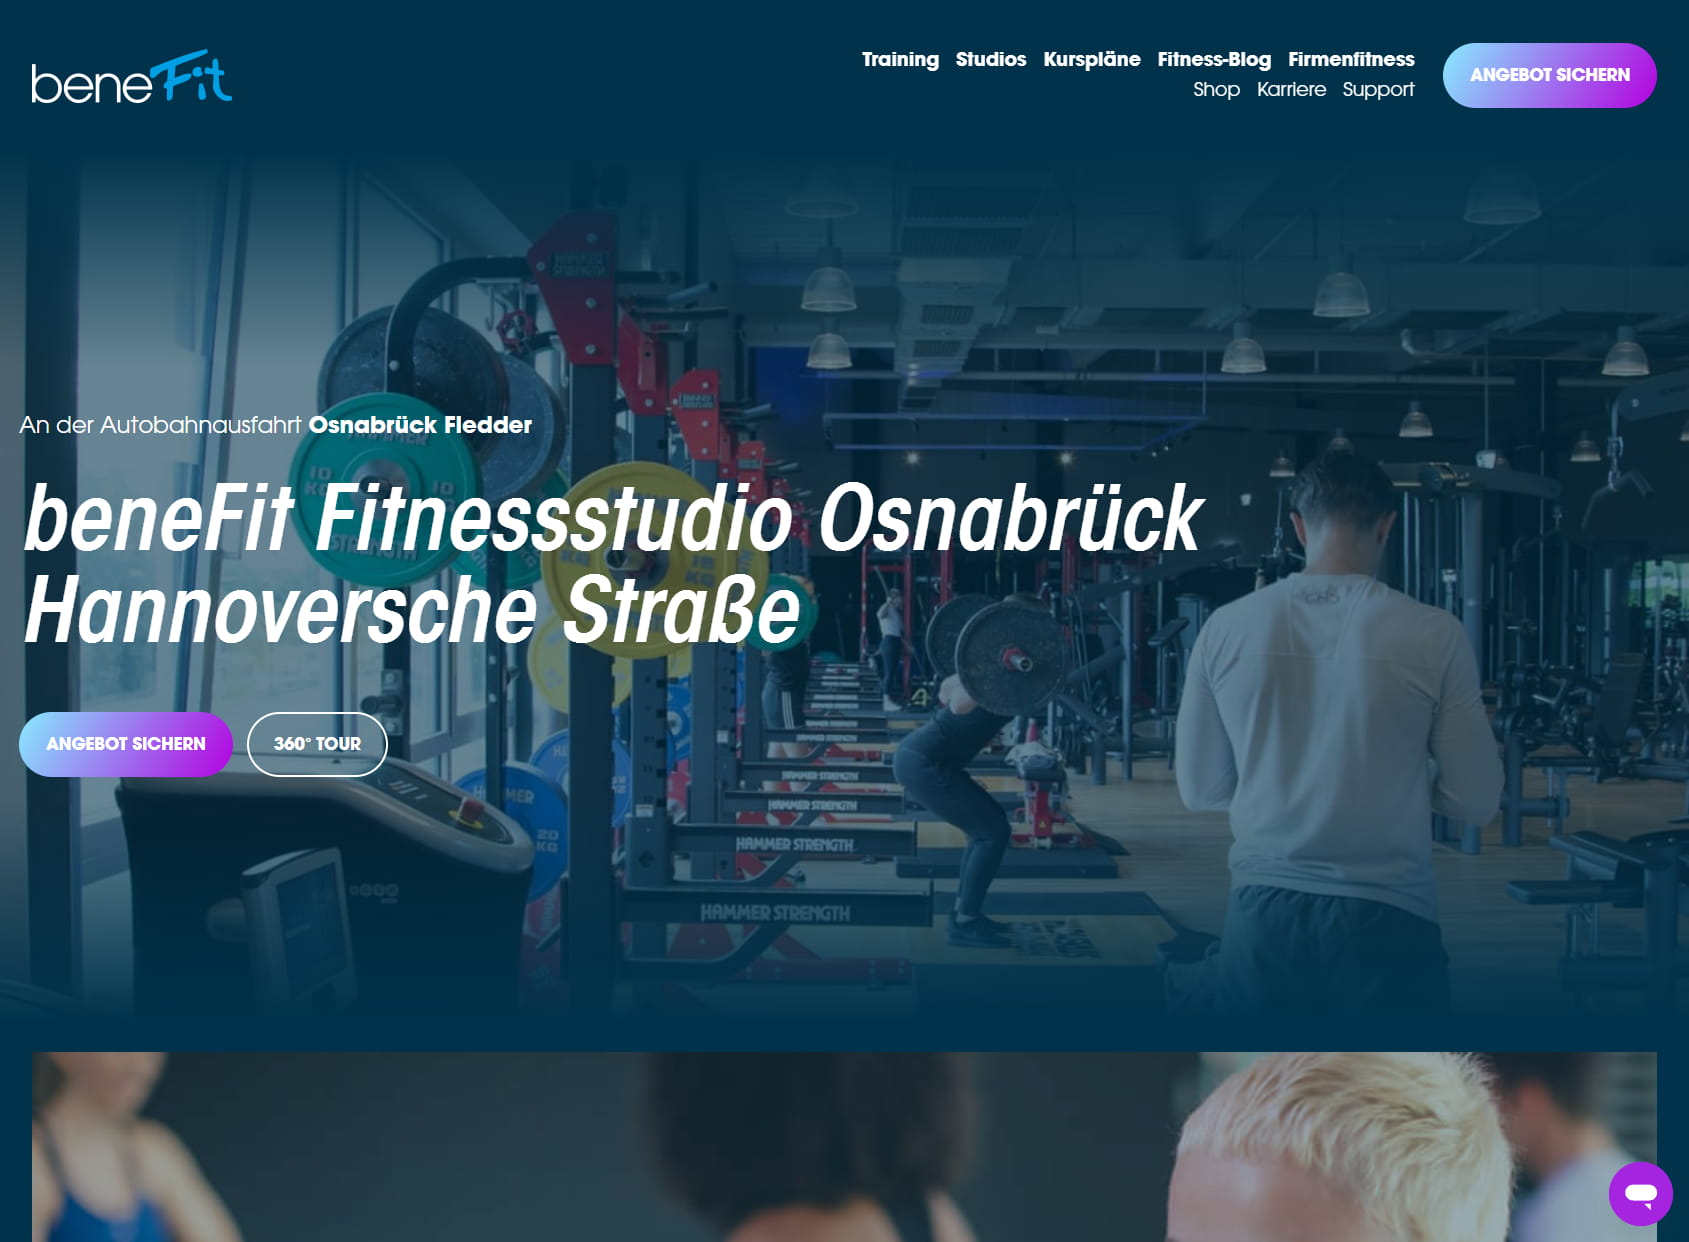 beneFit Fitnessstudio Osnabrück (Hannoversche Str.)